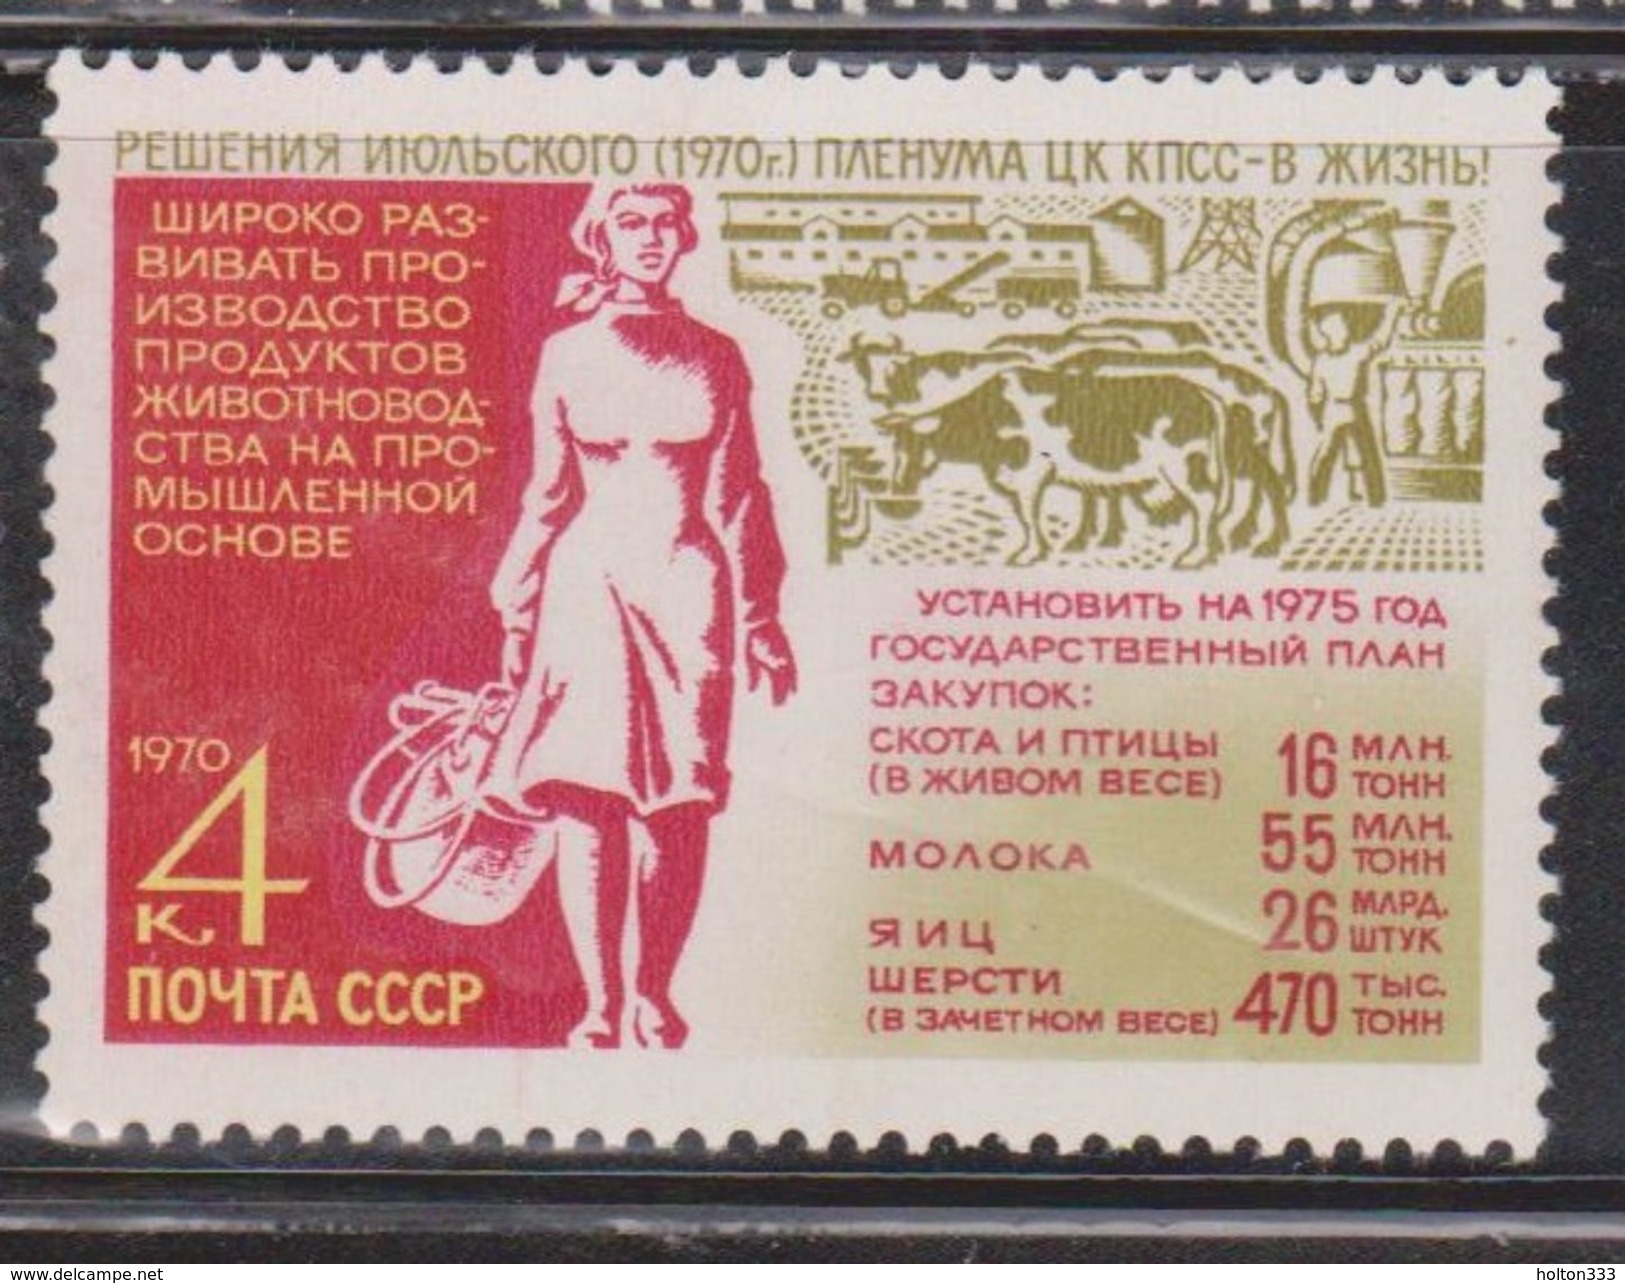 RUSSIA Scott # 3774 Mint Hinged - Farm Woman & Cattle Farm - Eilsendung (Eilpost)